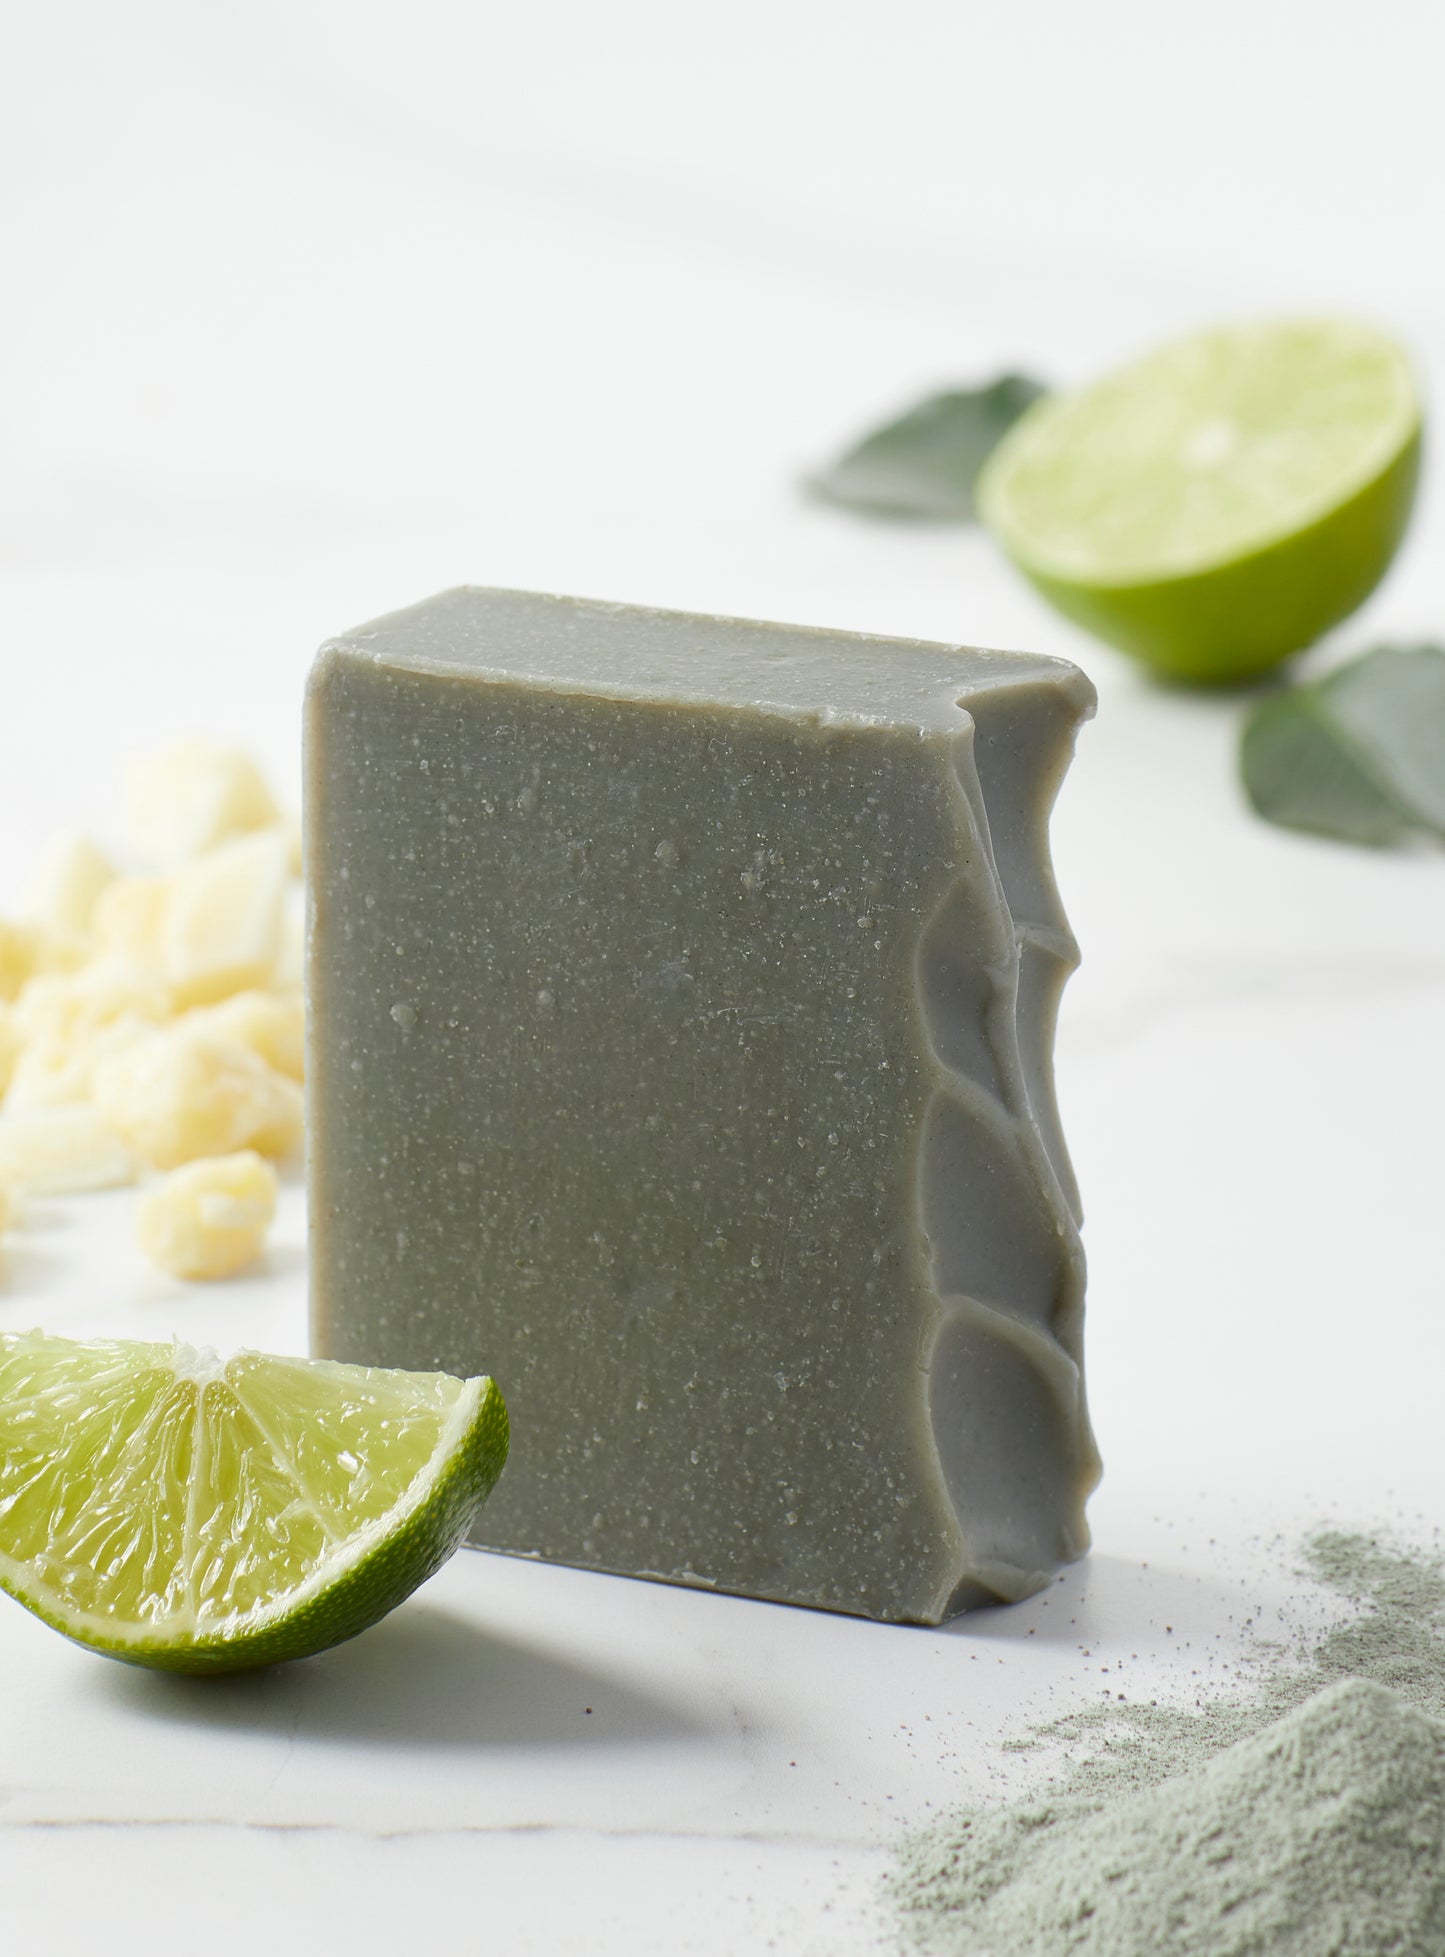 - Savon - Argile verte et Lime / Green clay & lime soap